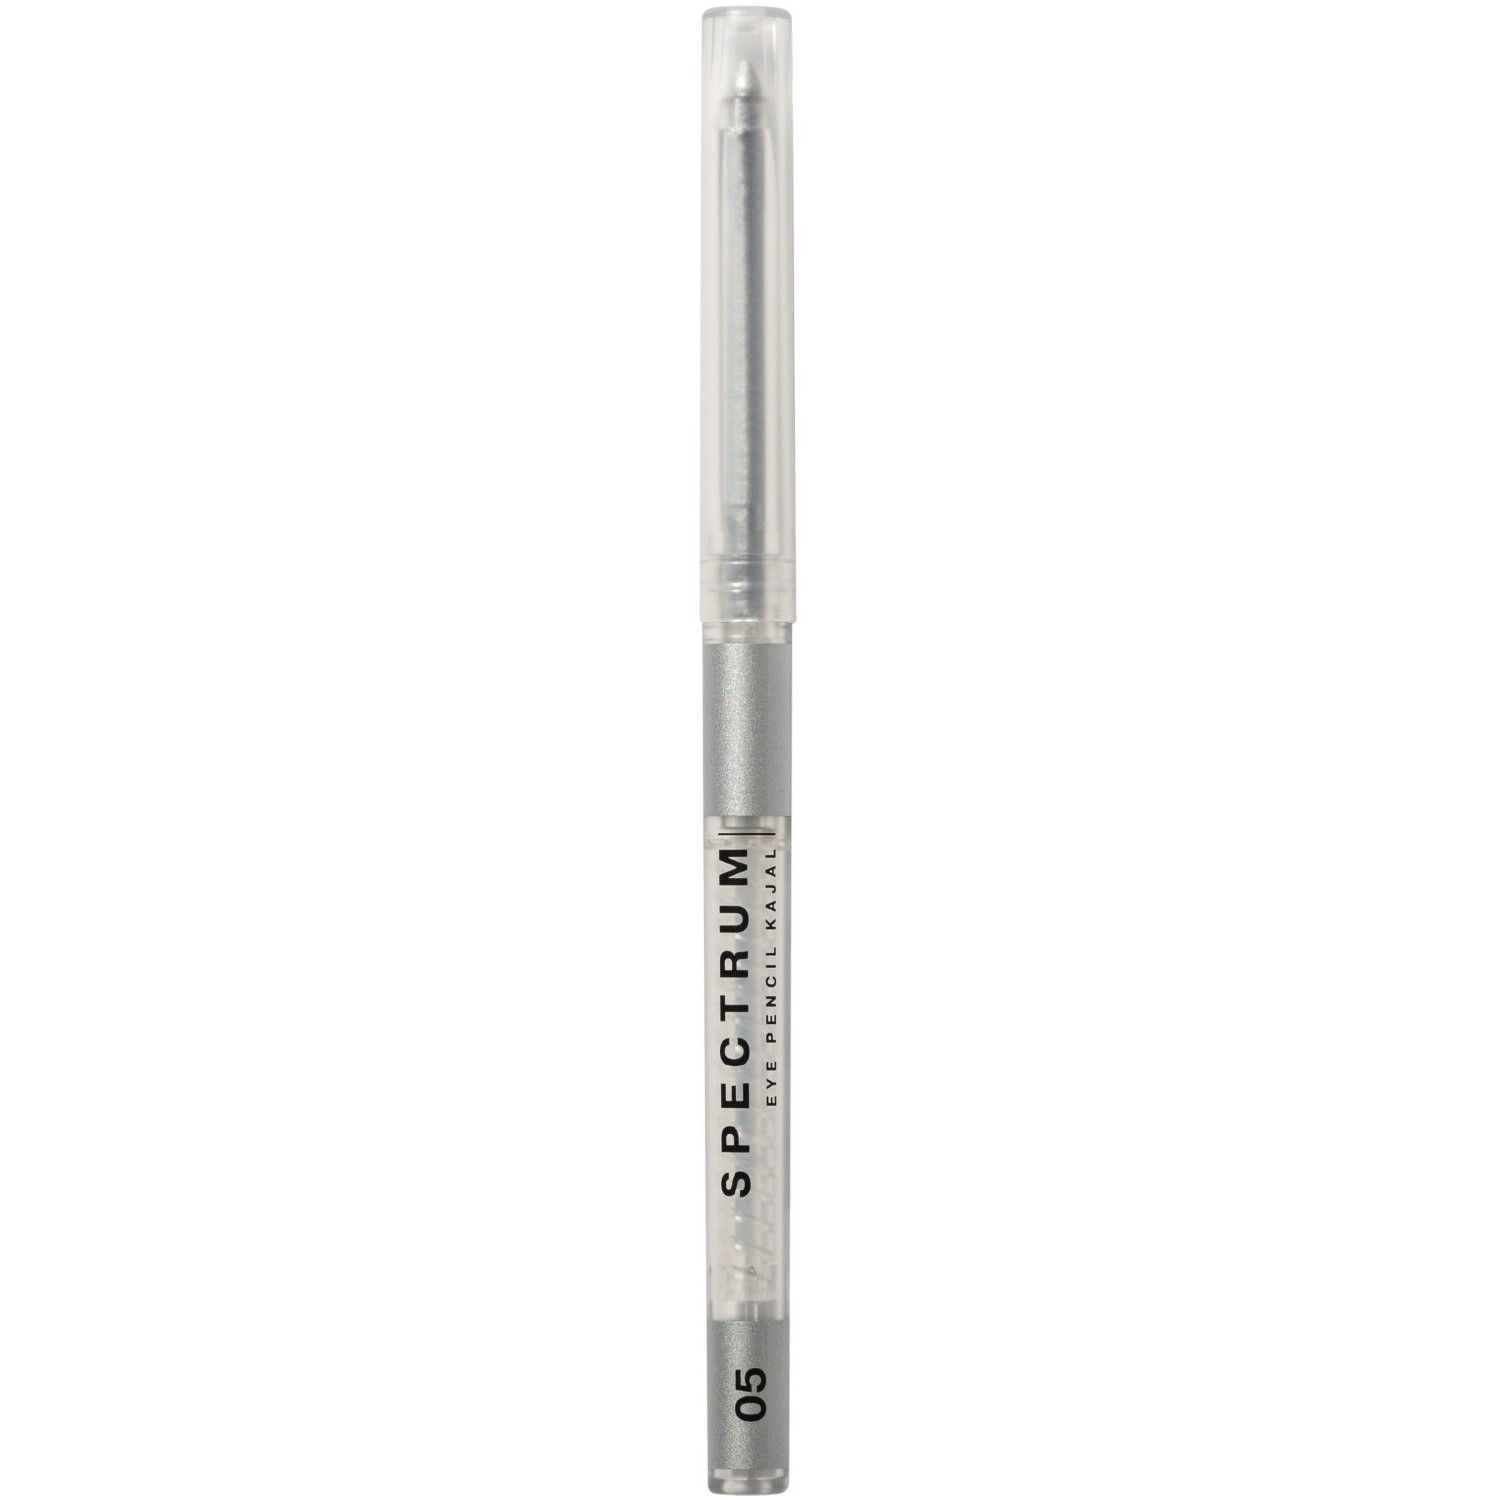 Карандаш для глаз Influence Beauty Spectrum автоматический, гелевый тон 05 0,28 г influence beauty карандаш для глаз spectrum автоматический гелевый стойкий